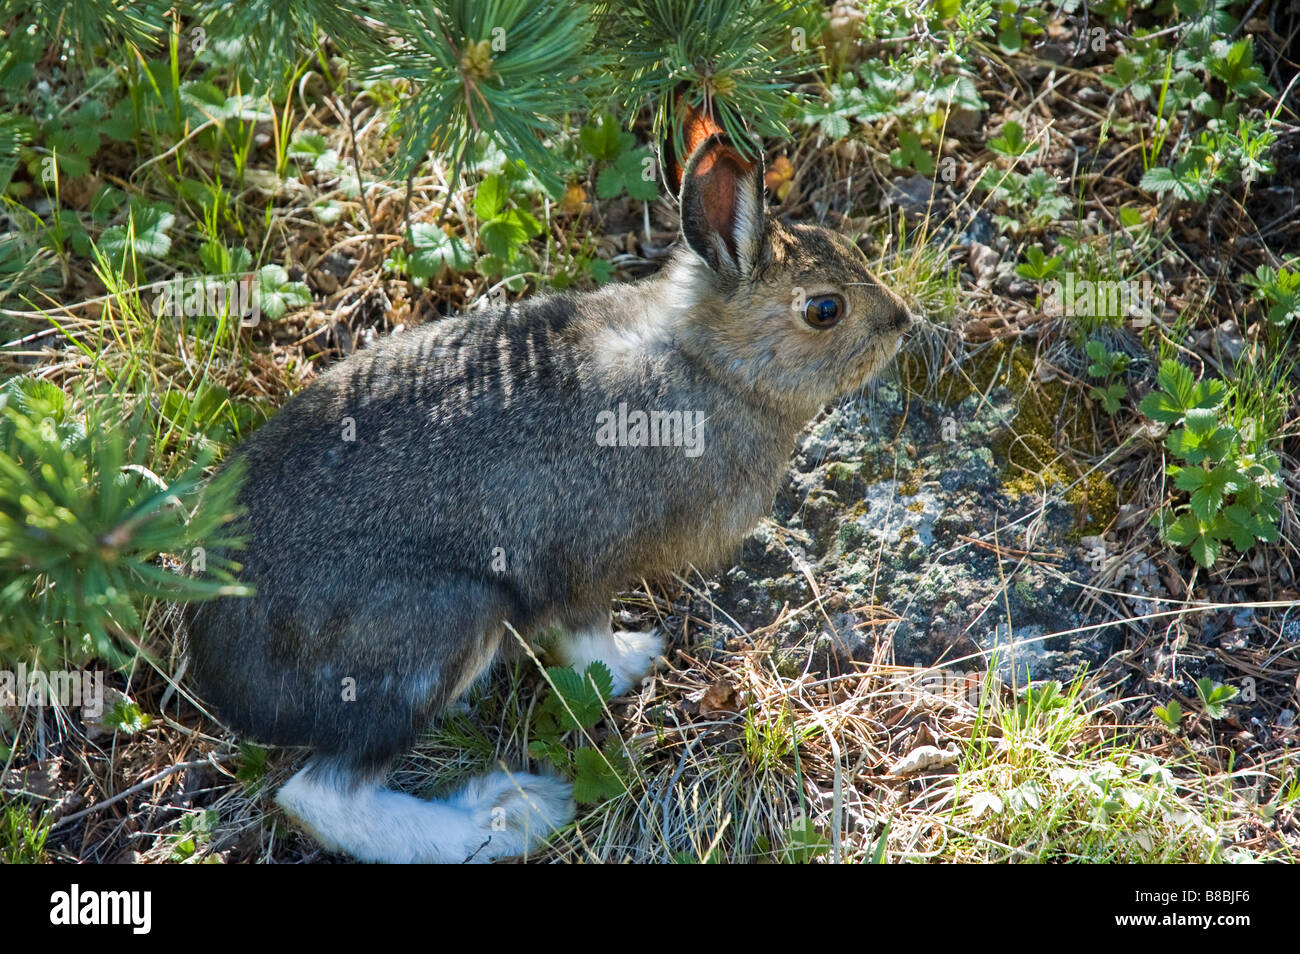 Snowshoe hare, Lepus americanus, cerca McCurdy Park, Lost Creek Wilderness Area, Pike National Forest, Colorado. Foto de stock